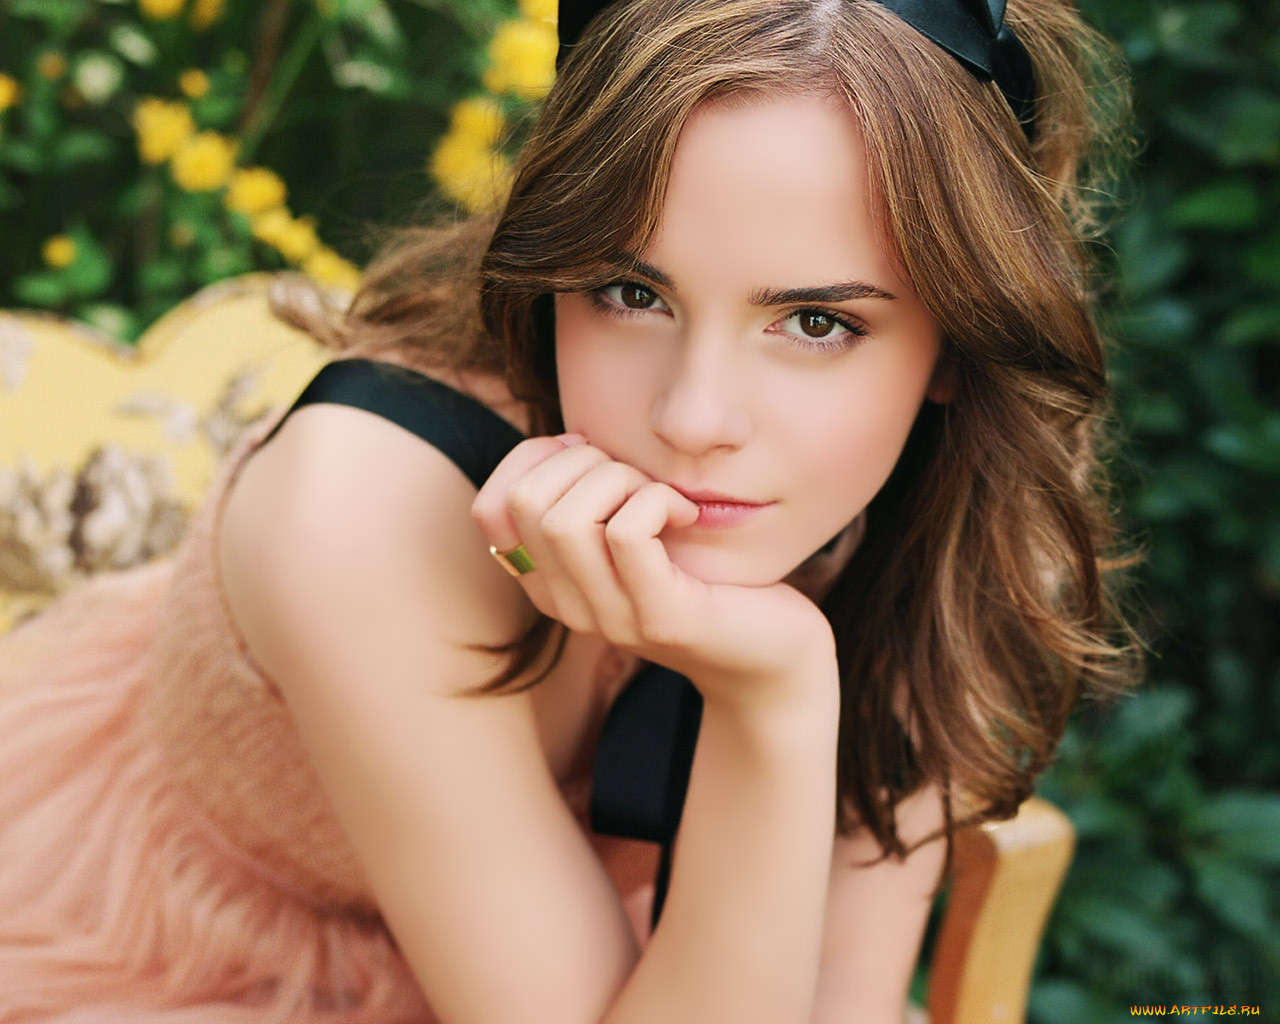 Emma Watson the actress grew up near Oxford